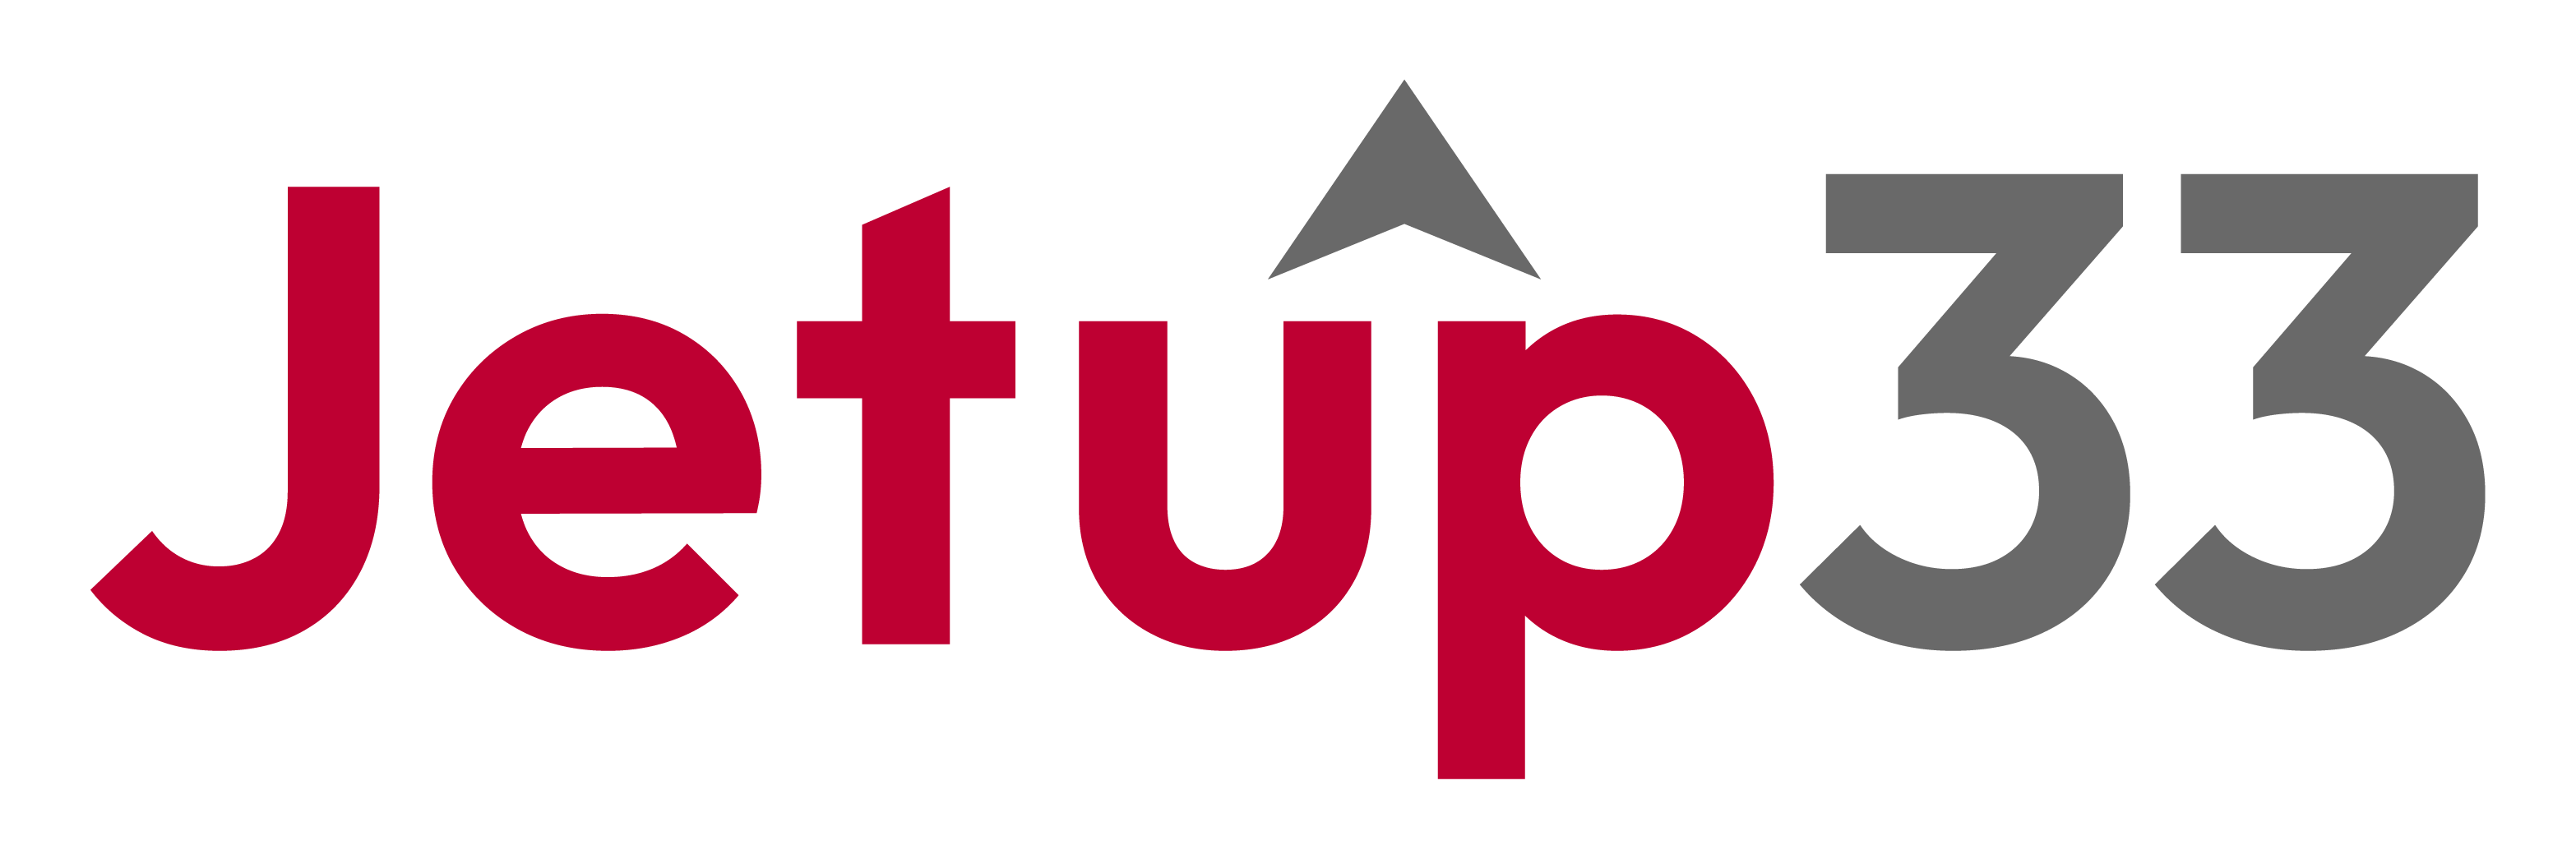 jetup33-primary-logo